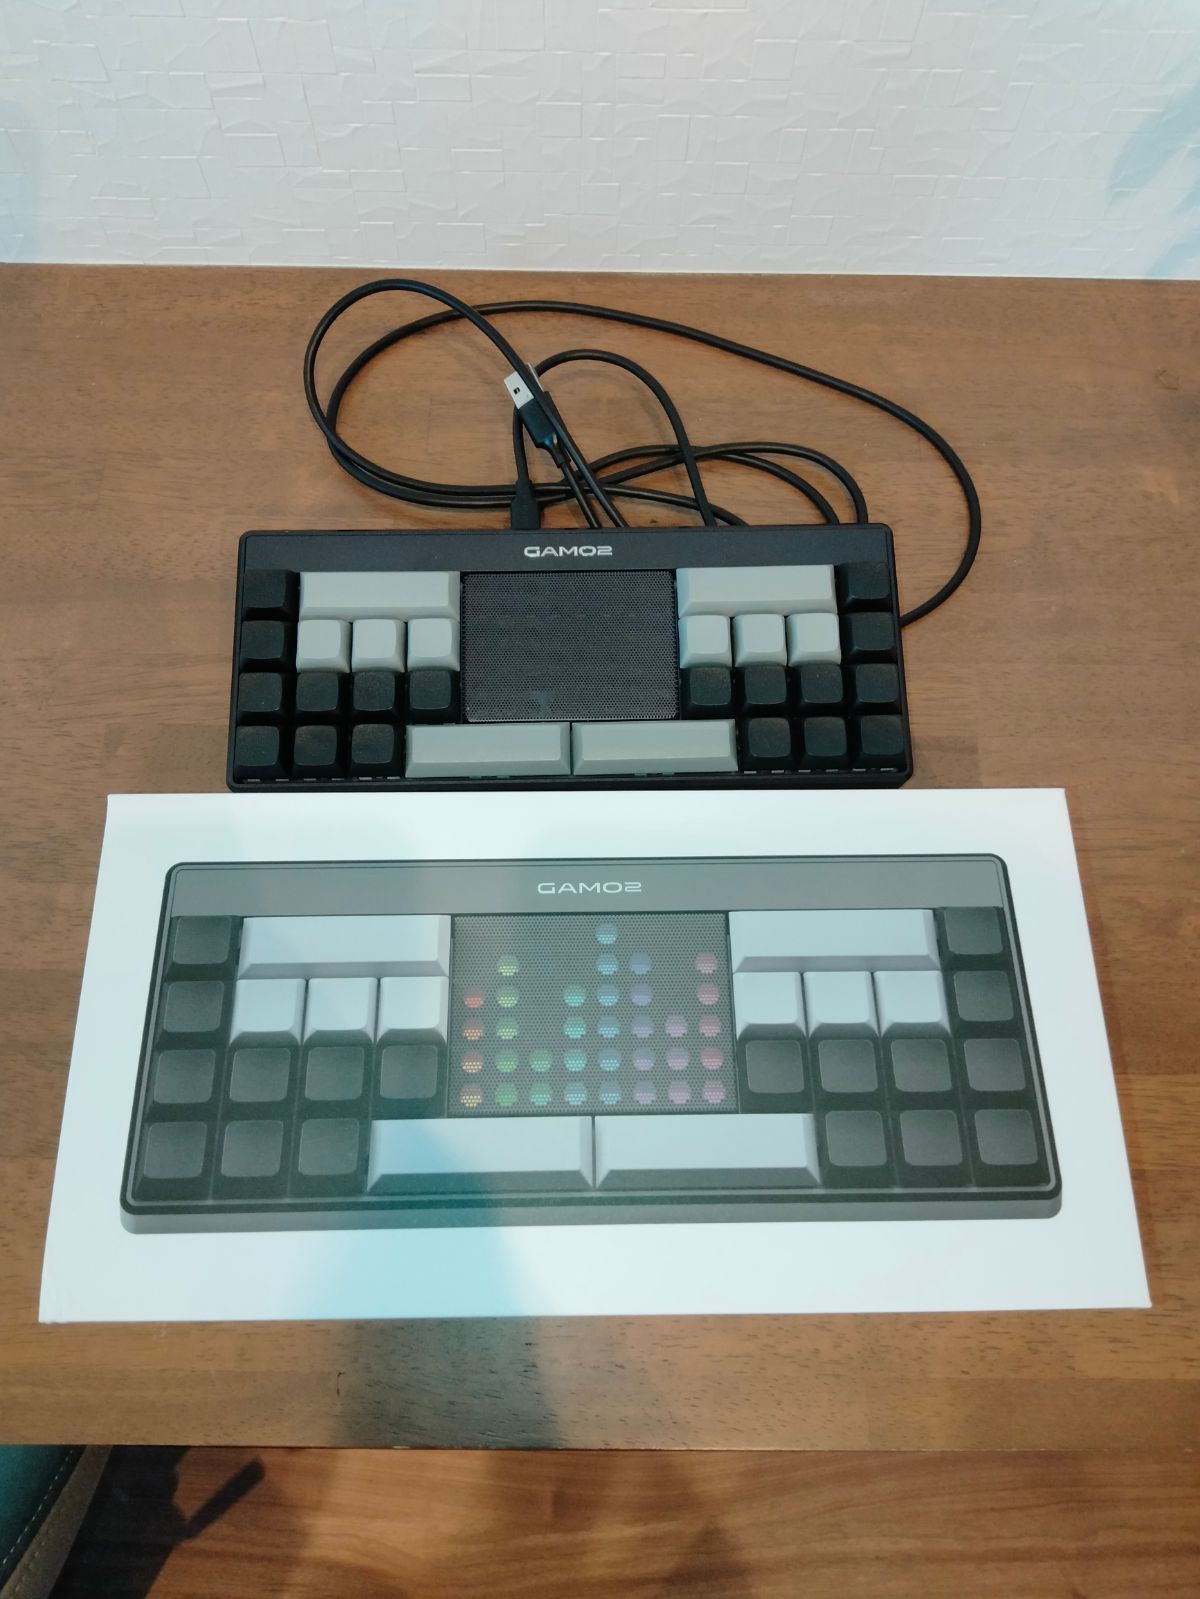 GAMO2 K28 茶軸 Keyboard Style Controller - PC周辺機器